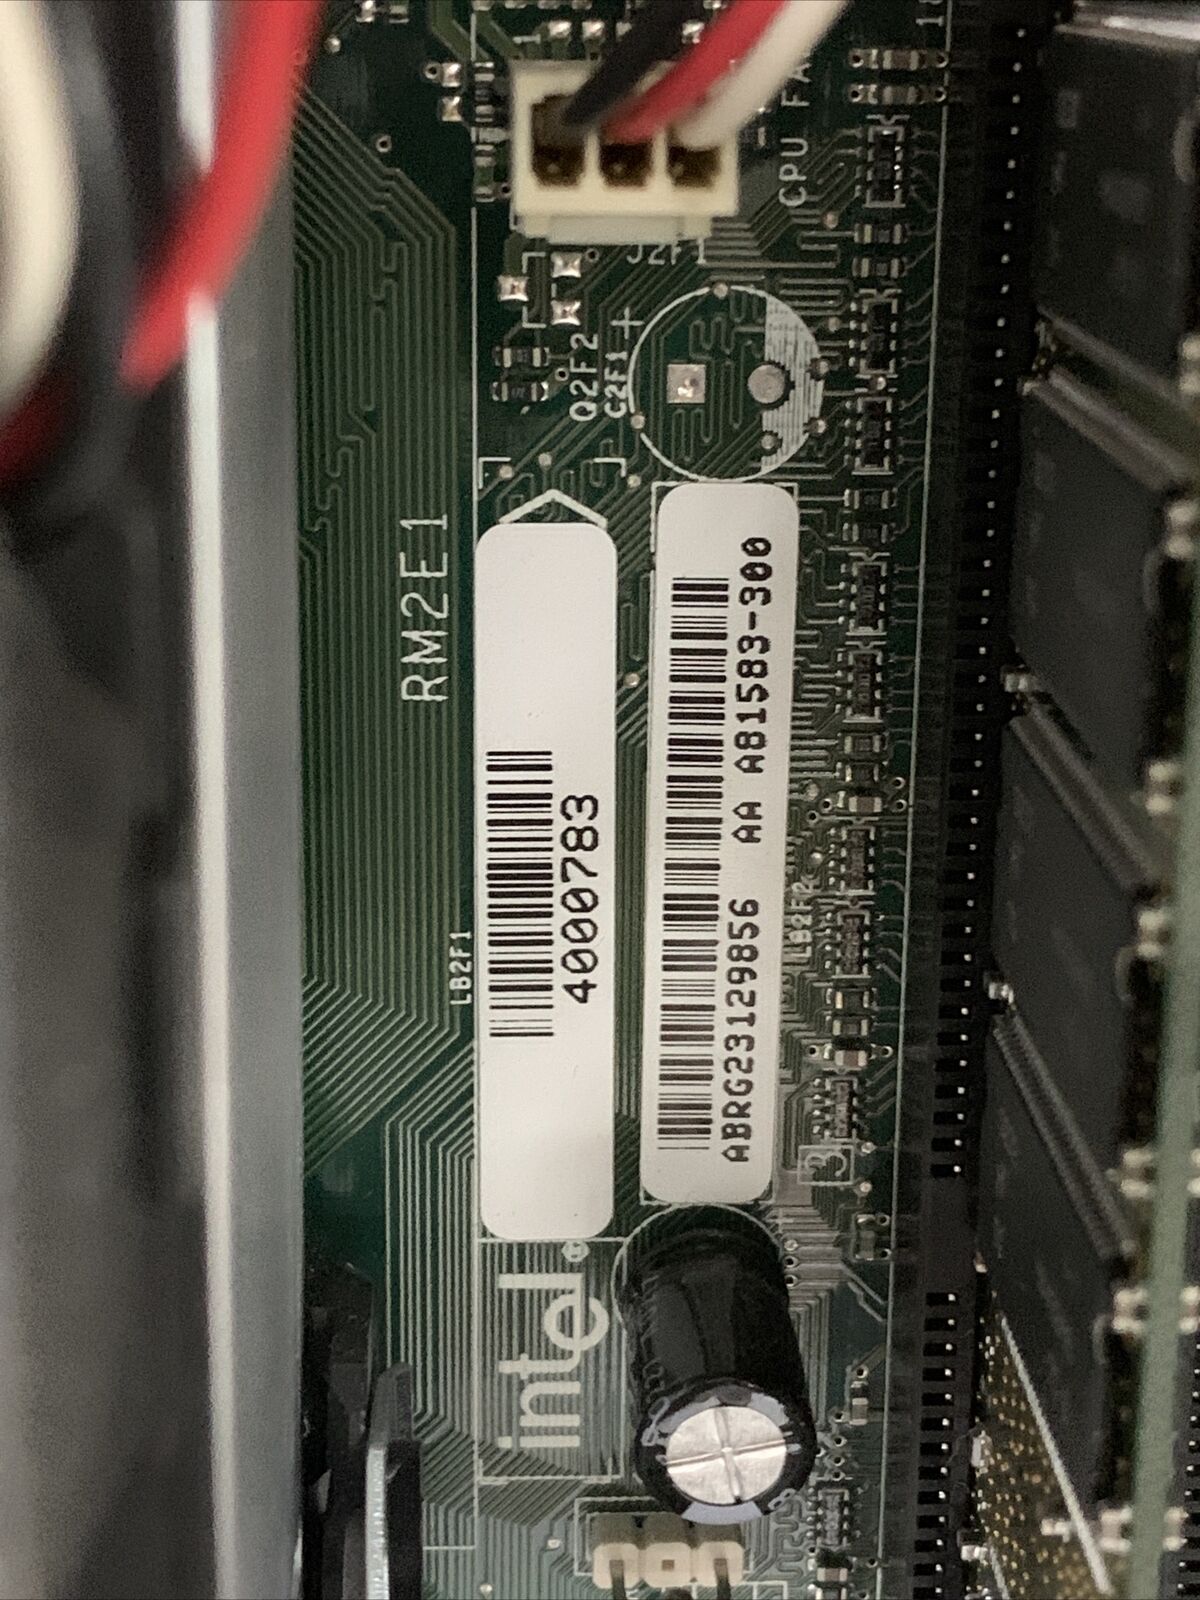 Gateway E-4000 MT Intel Pentium 4 1.8GHz 512MB RAM No HDD No OS Broken Foot